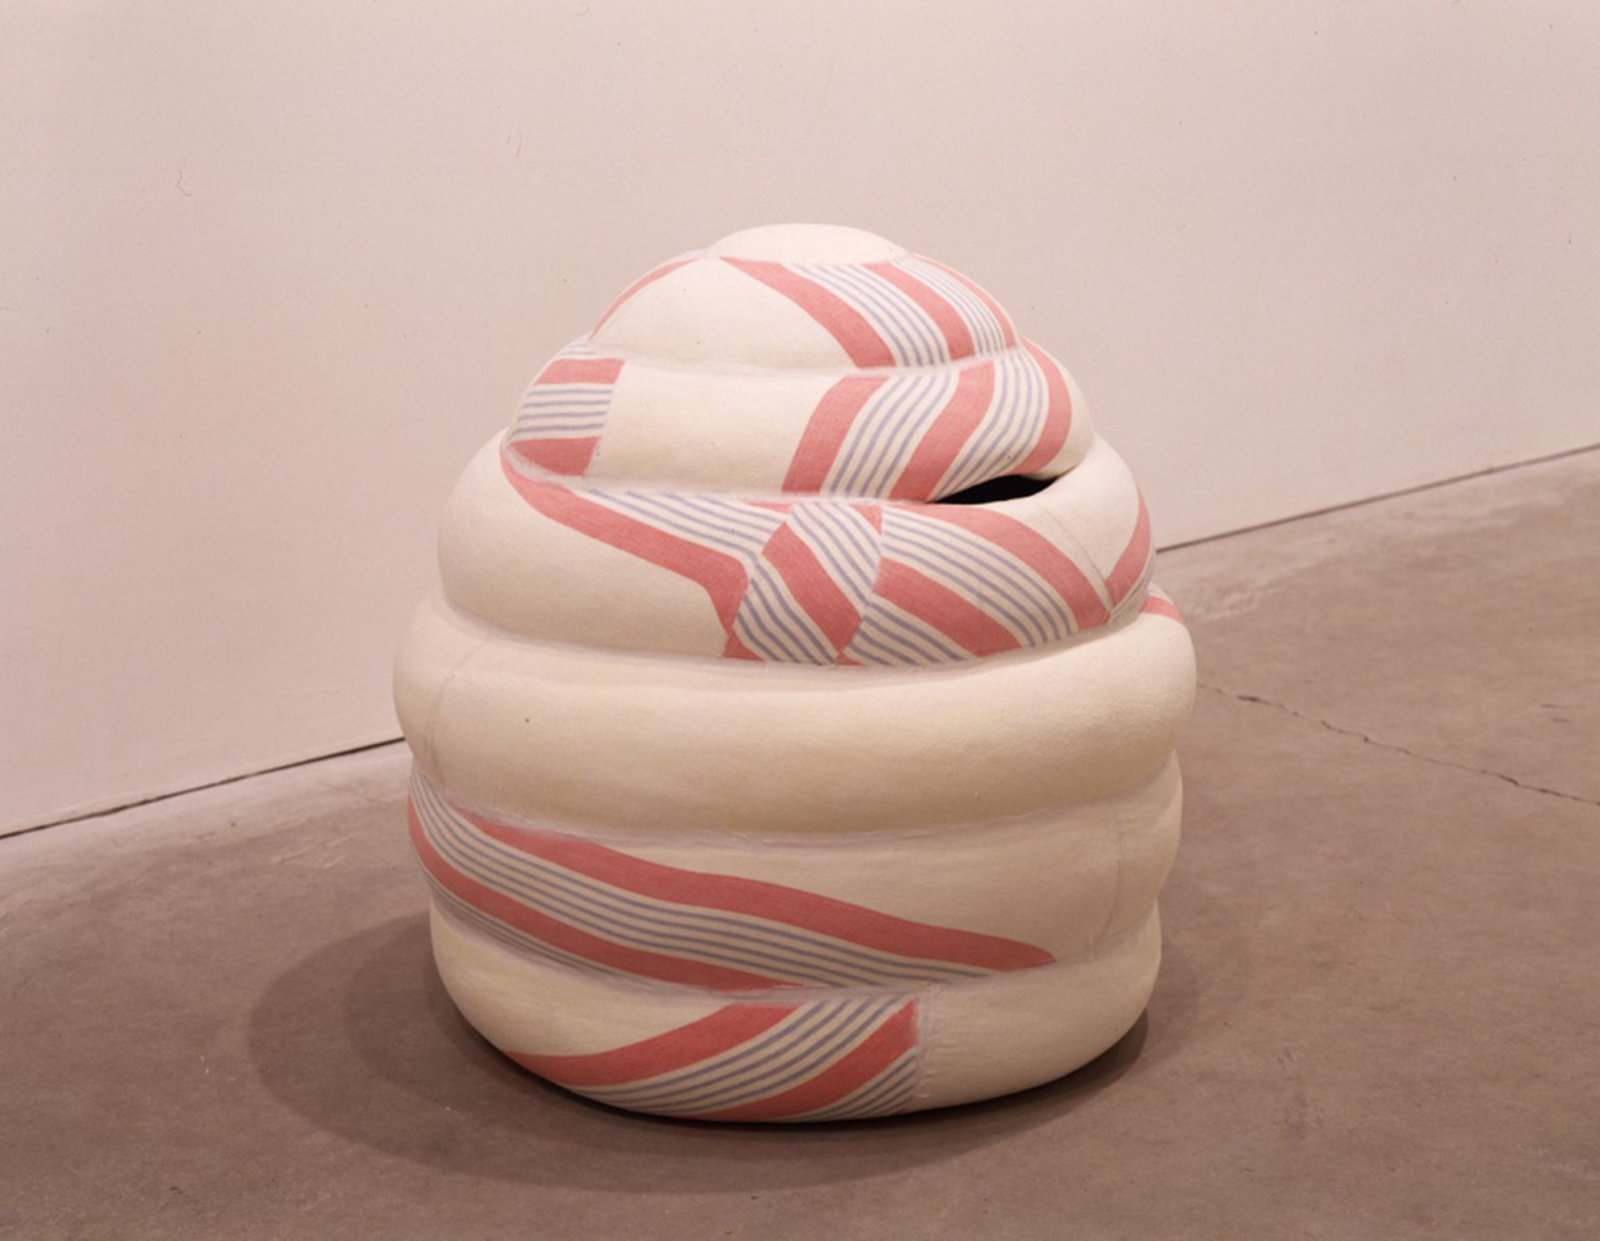 Liz Magor, Sleeping Pouch 1, 2, 3 (detail), 1997, polyurethane rubber, fabric, each 29 x 24 x 24 in. (58 x 62 x 62 cm). Photo: Isaac Applebaum